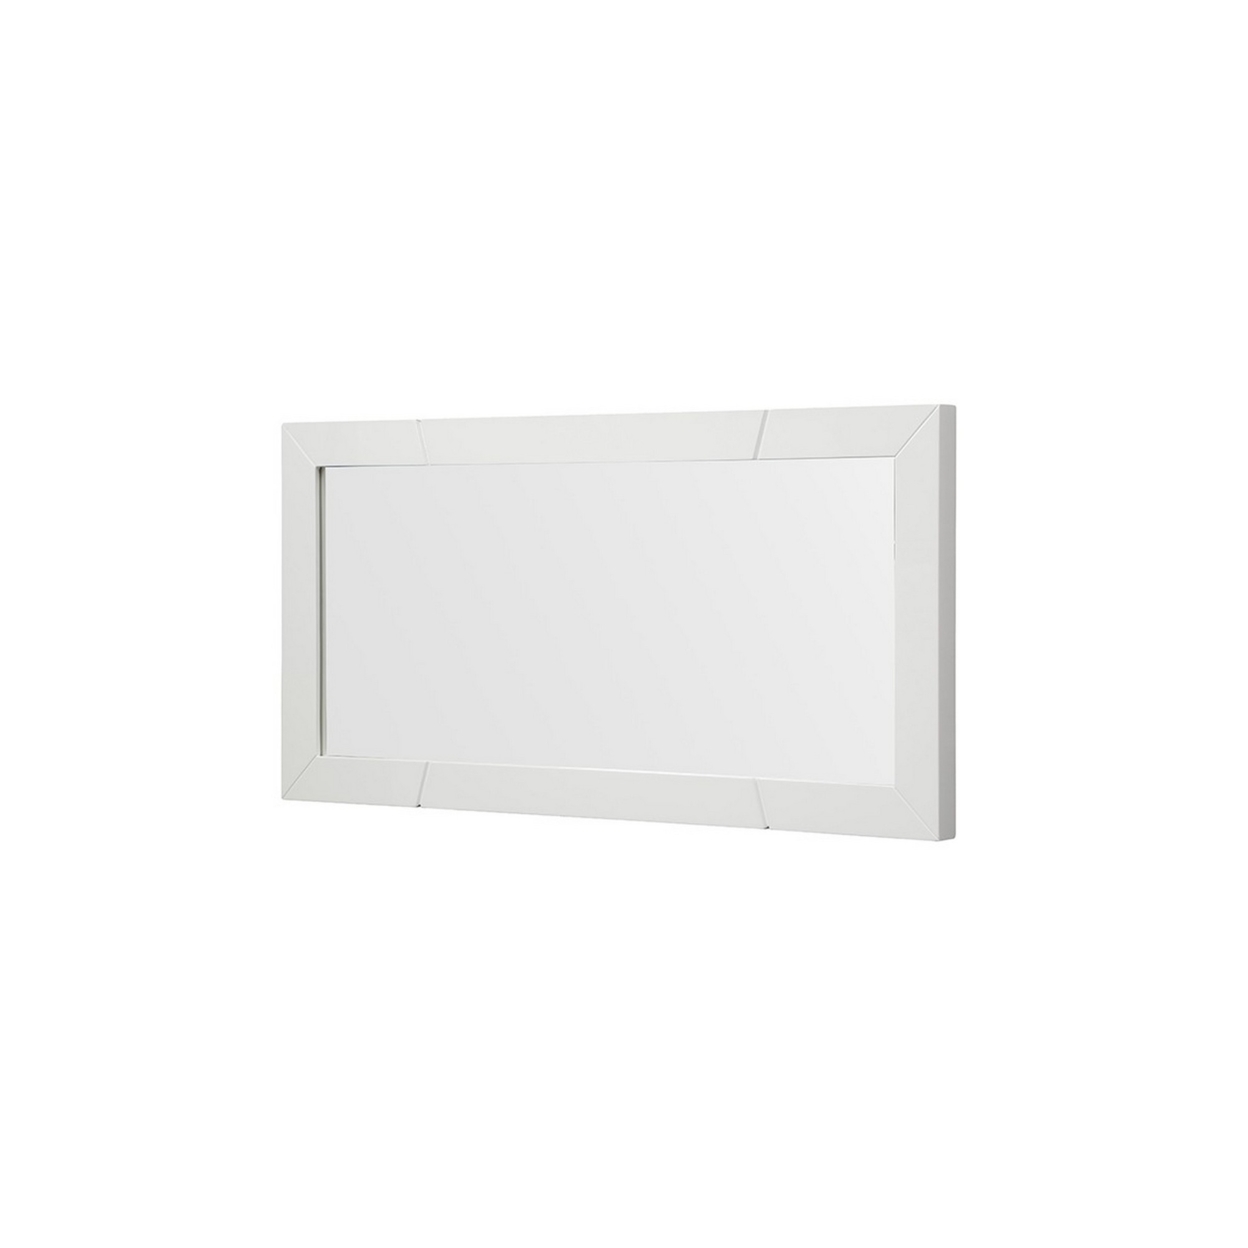 Contemporary Style Wall Mirror With Rectangle Framework, White- Saltoro Sherpi